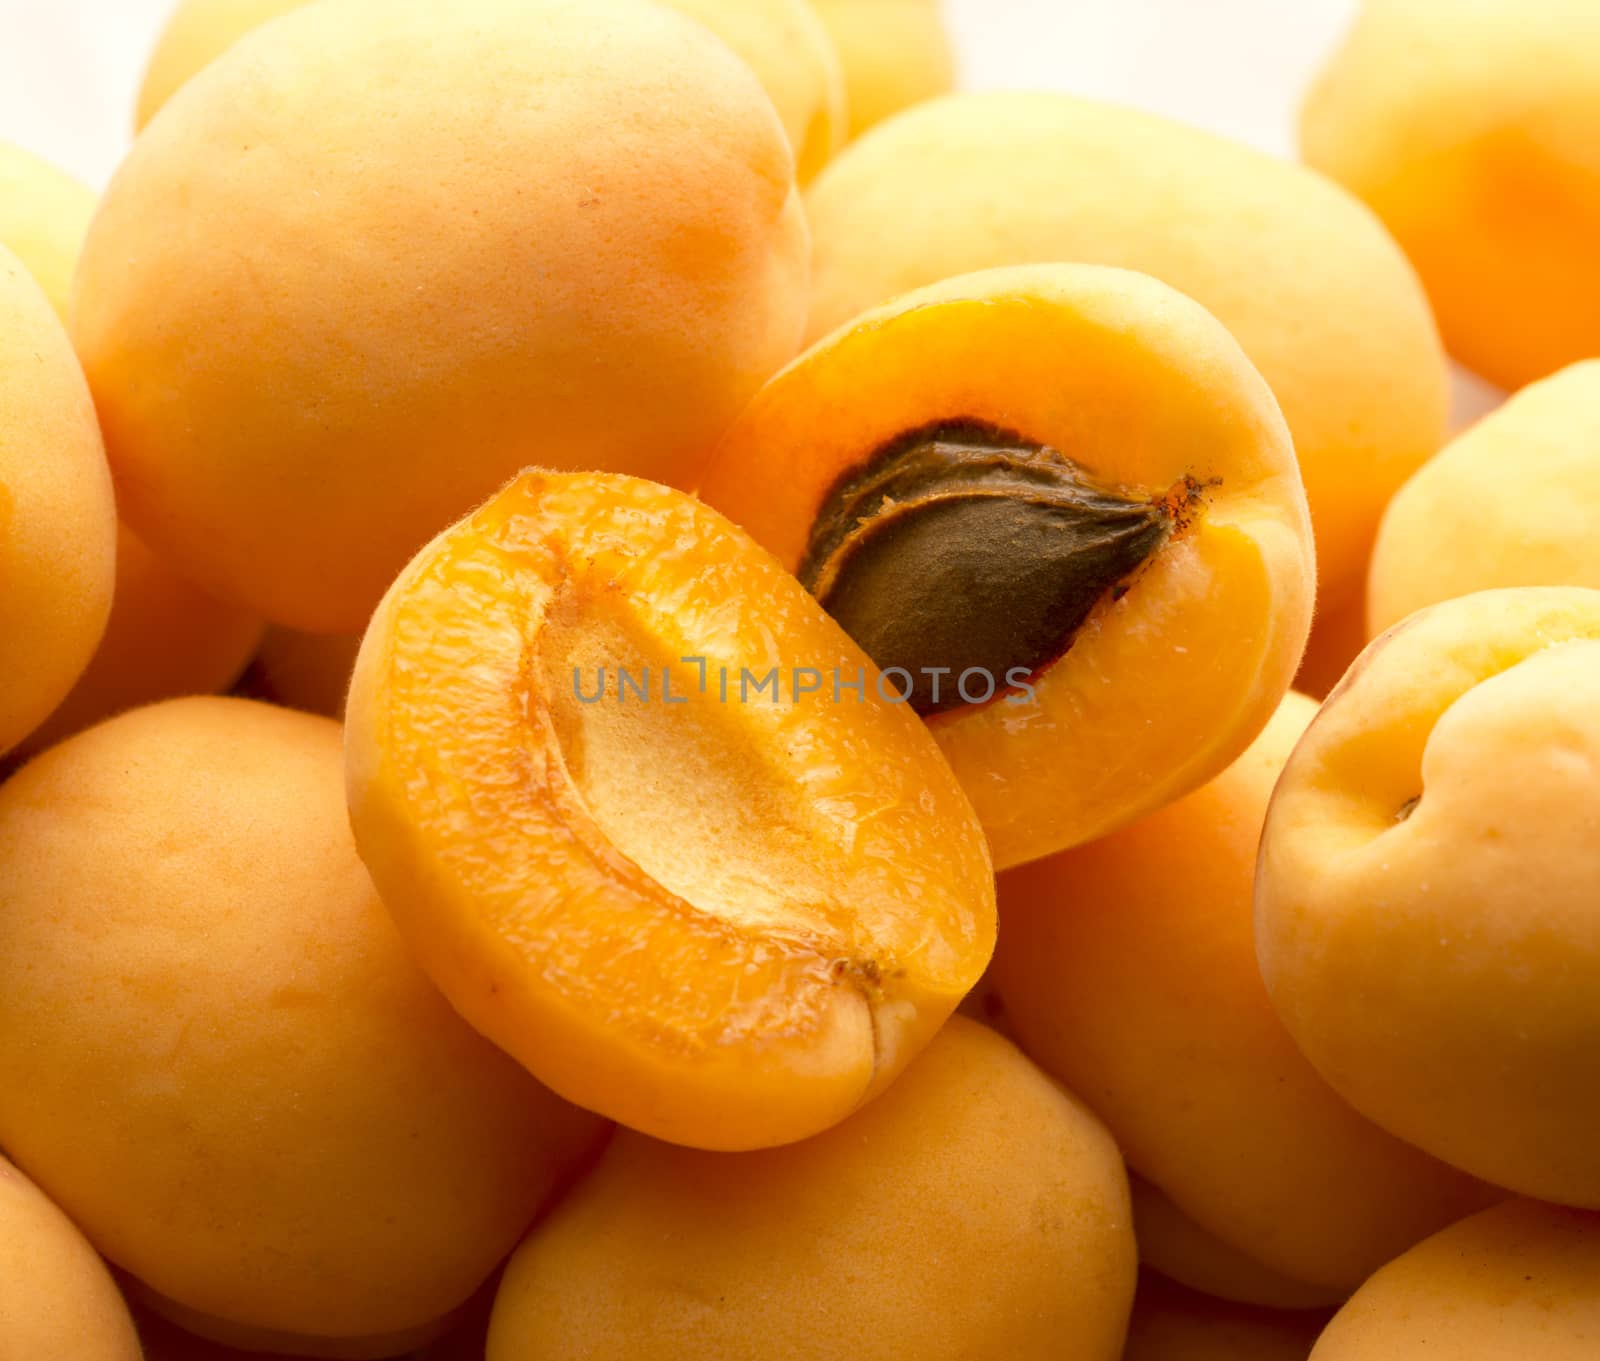 Heap of ripe apricots